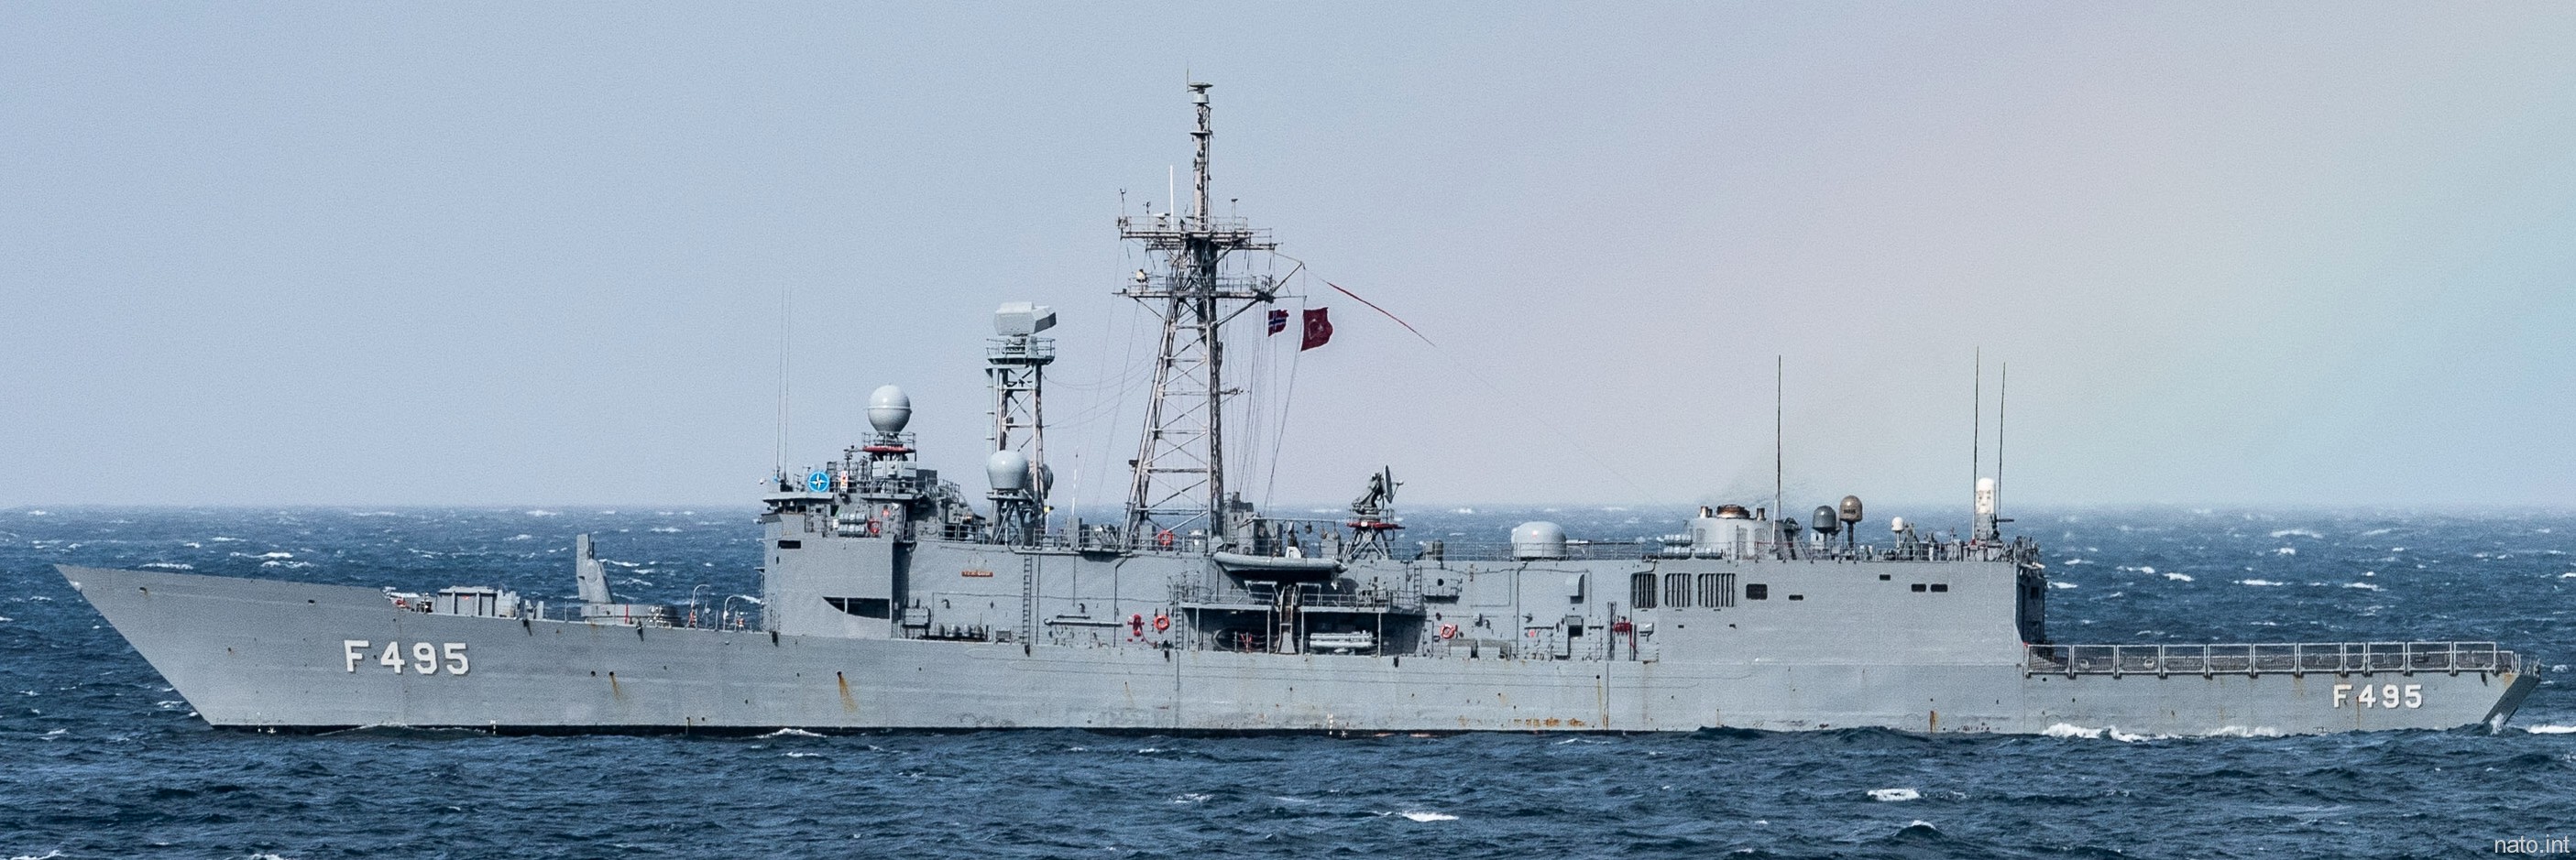 f-495 tcg gediz gabya g-class perry frigate ffg turkish navy türk deniz kuvvetleri 08